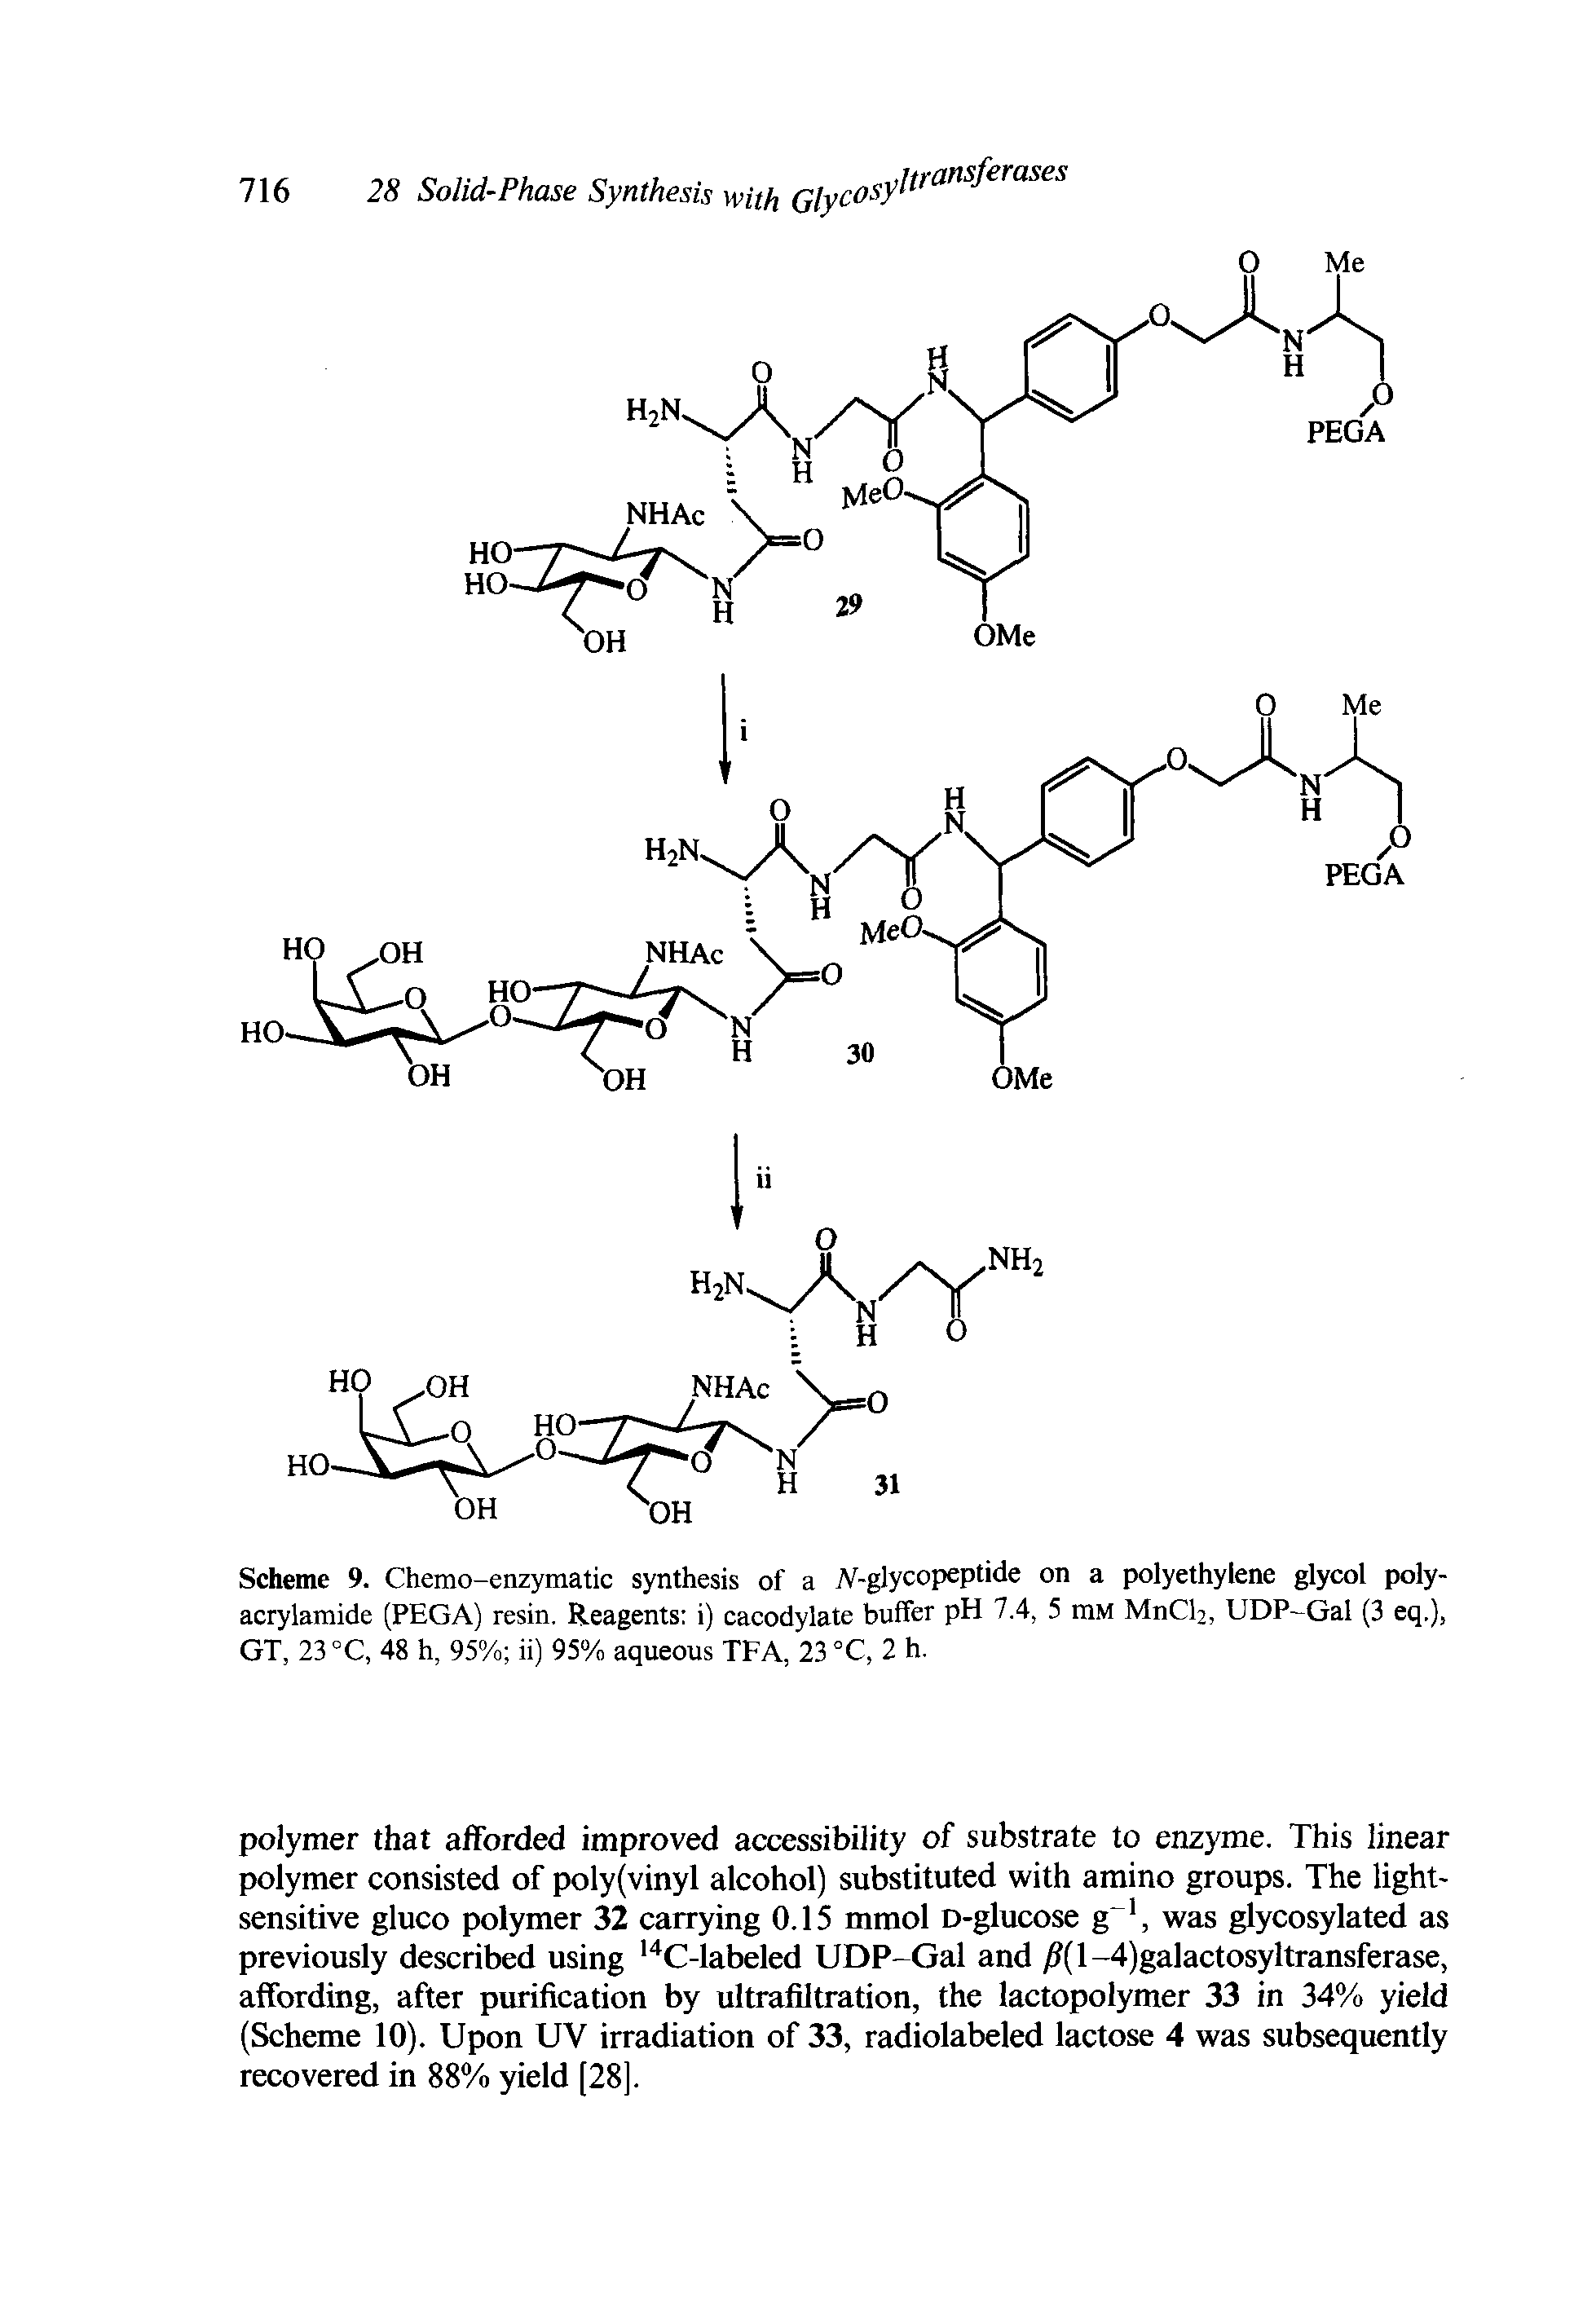 Scheme 9. Chemo-enzymatic synthesis of a iV-glycopeptide on a polyethylene glycol polyacrylamide (PEGA) resin. Reagents i) cacodylate buffer pH 7.4, 5 mM MnCl2, UDP-Gal (3 eq.), GT, 23 °C, 48 h, 95% ii) 95% aqueous TEA, 23 °C, 2 h.